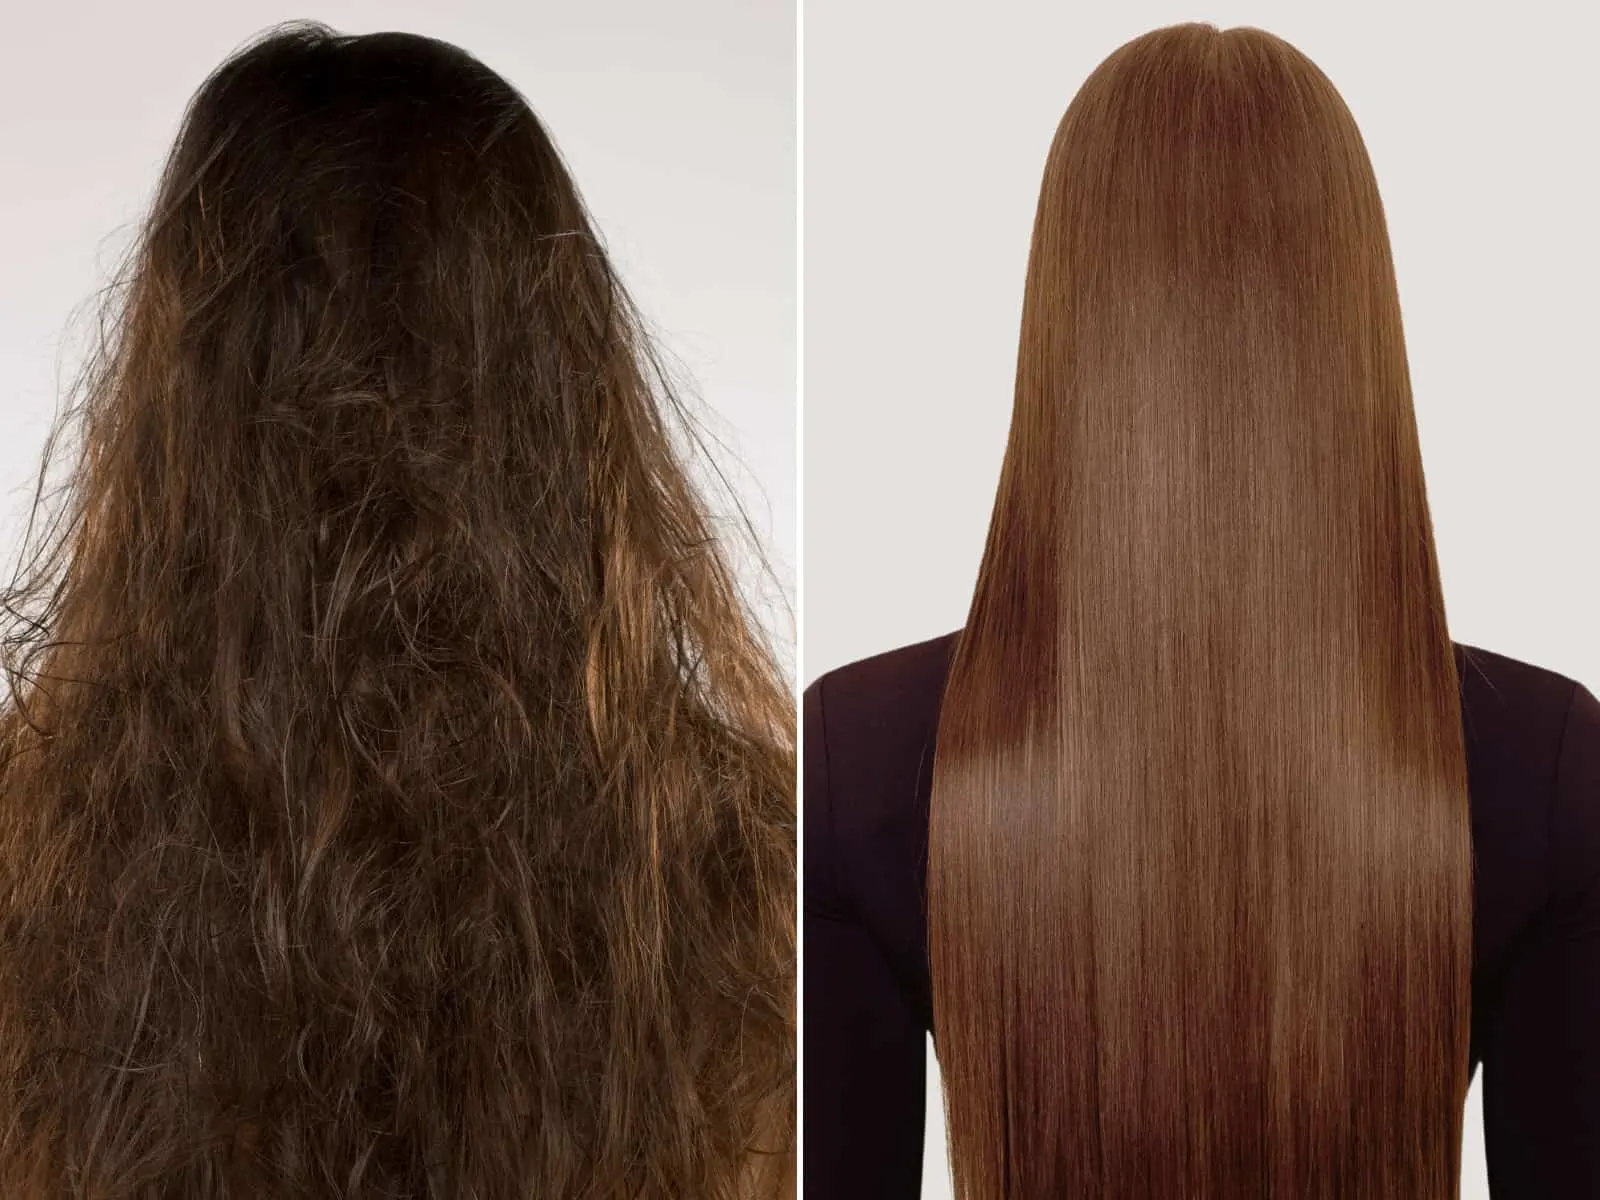 frizzy hair vs smooth hair